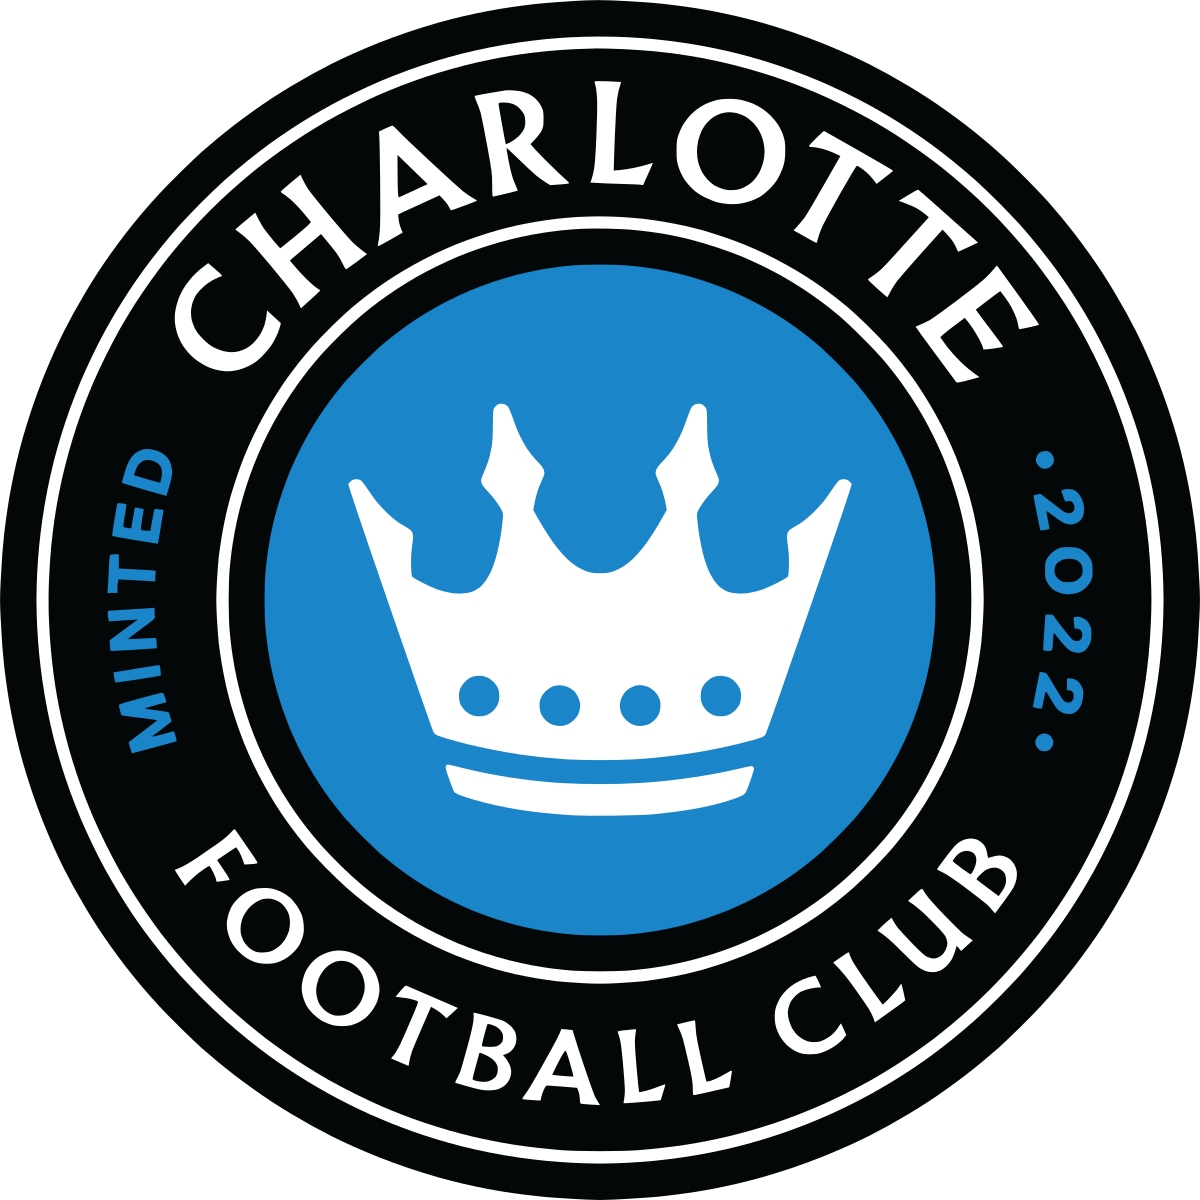 CLUB CHARLOTTE FC